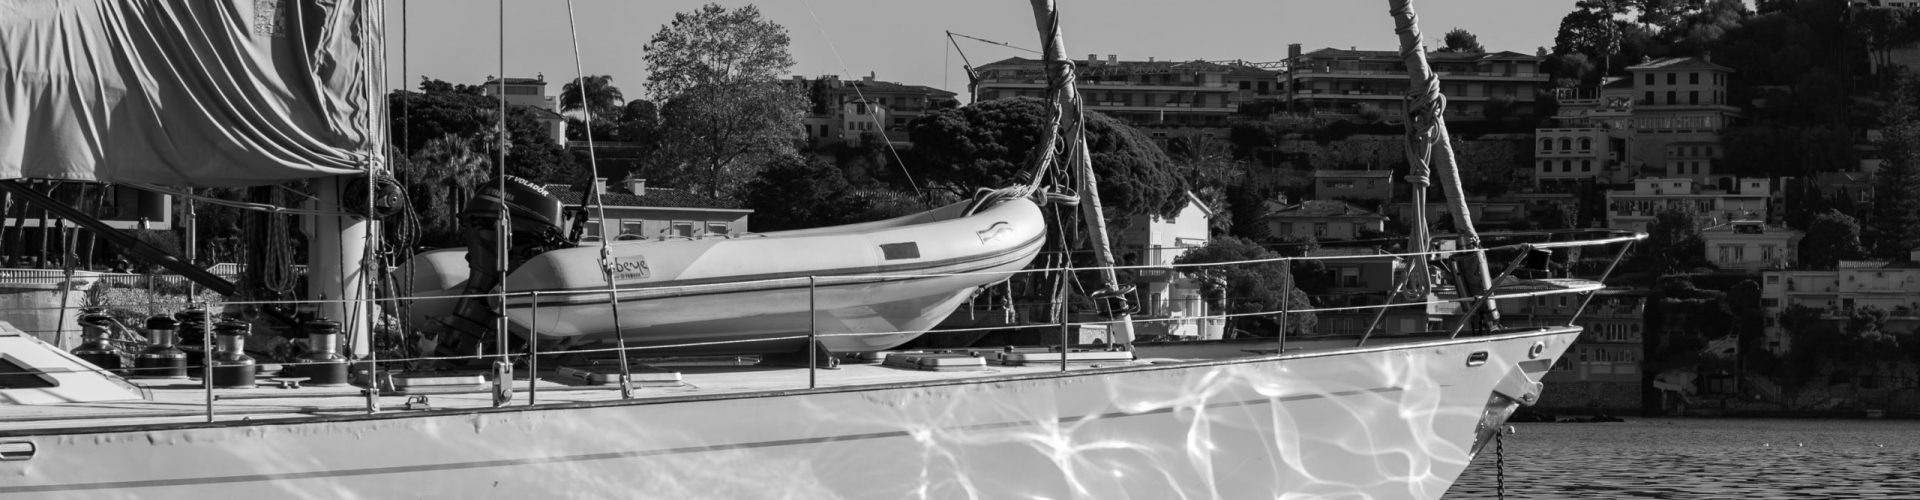 ©YG_Marina Yacht Wear 11.2021 LR-00906